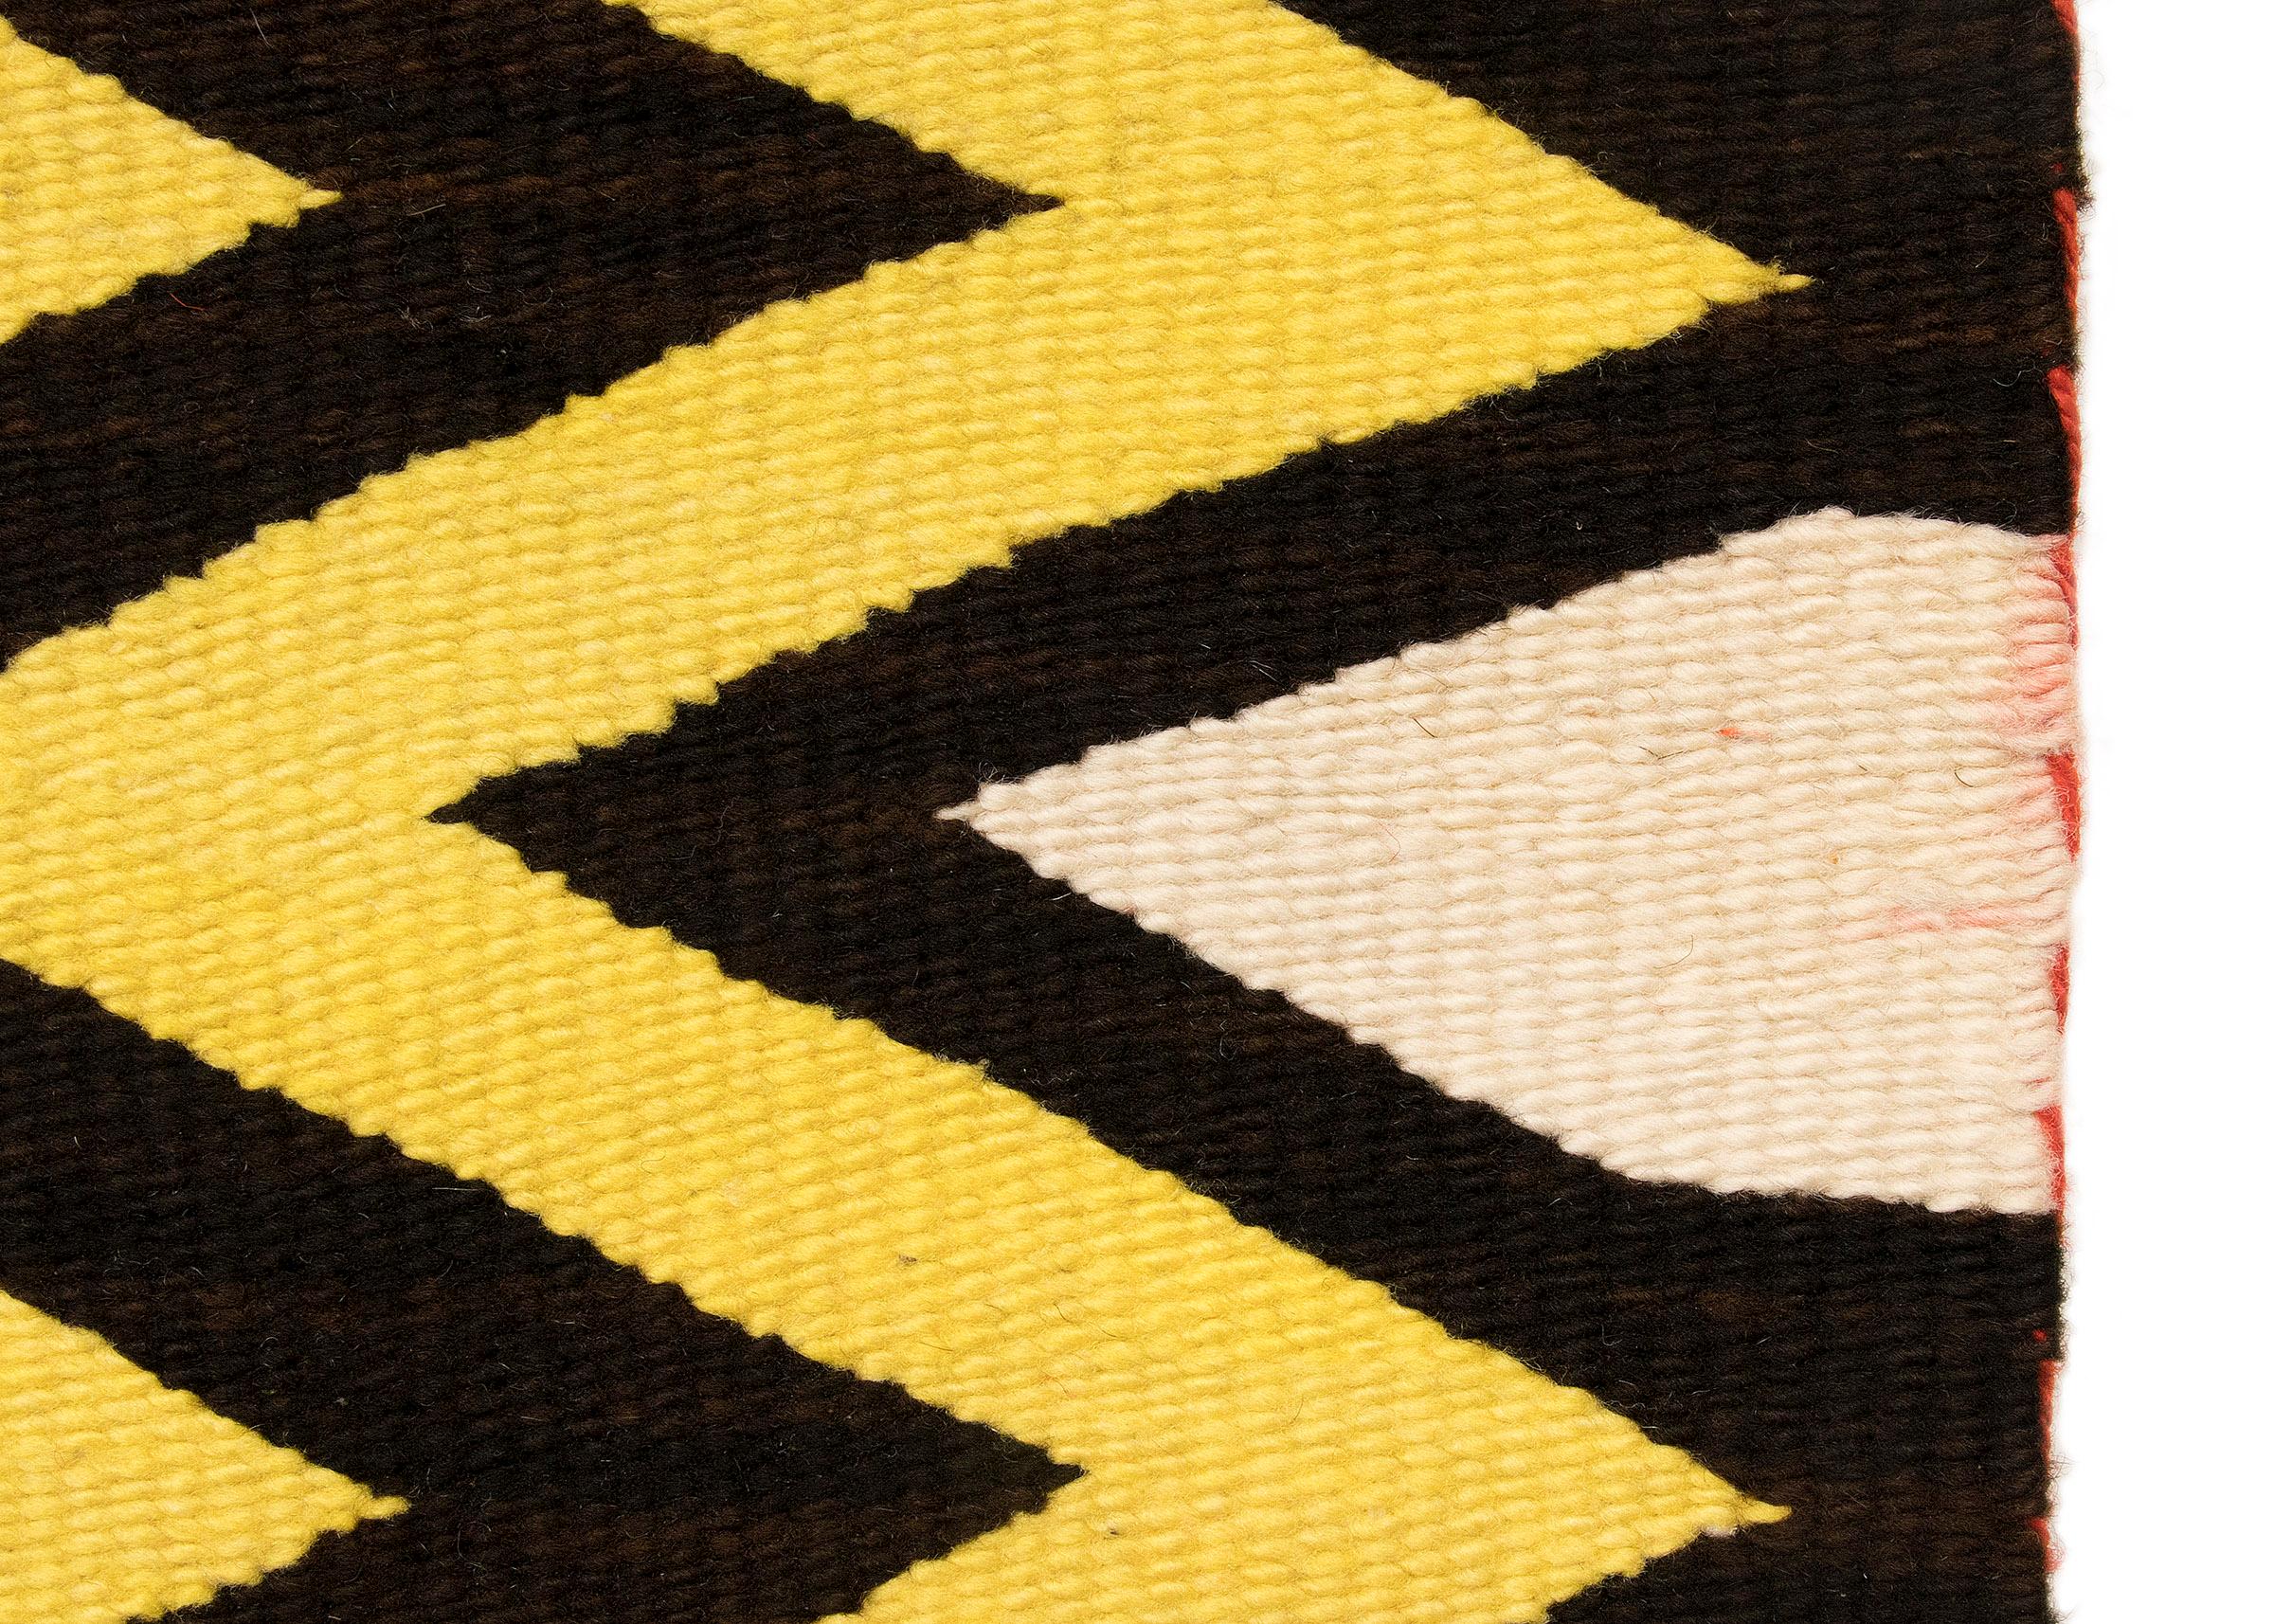 Hand-Woven Vintage Navajo Rug, Lightning Pattern, circa 1935, Yellow, Red, Black, & White